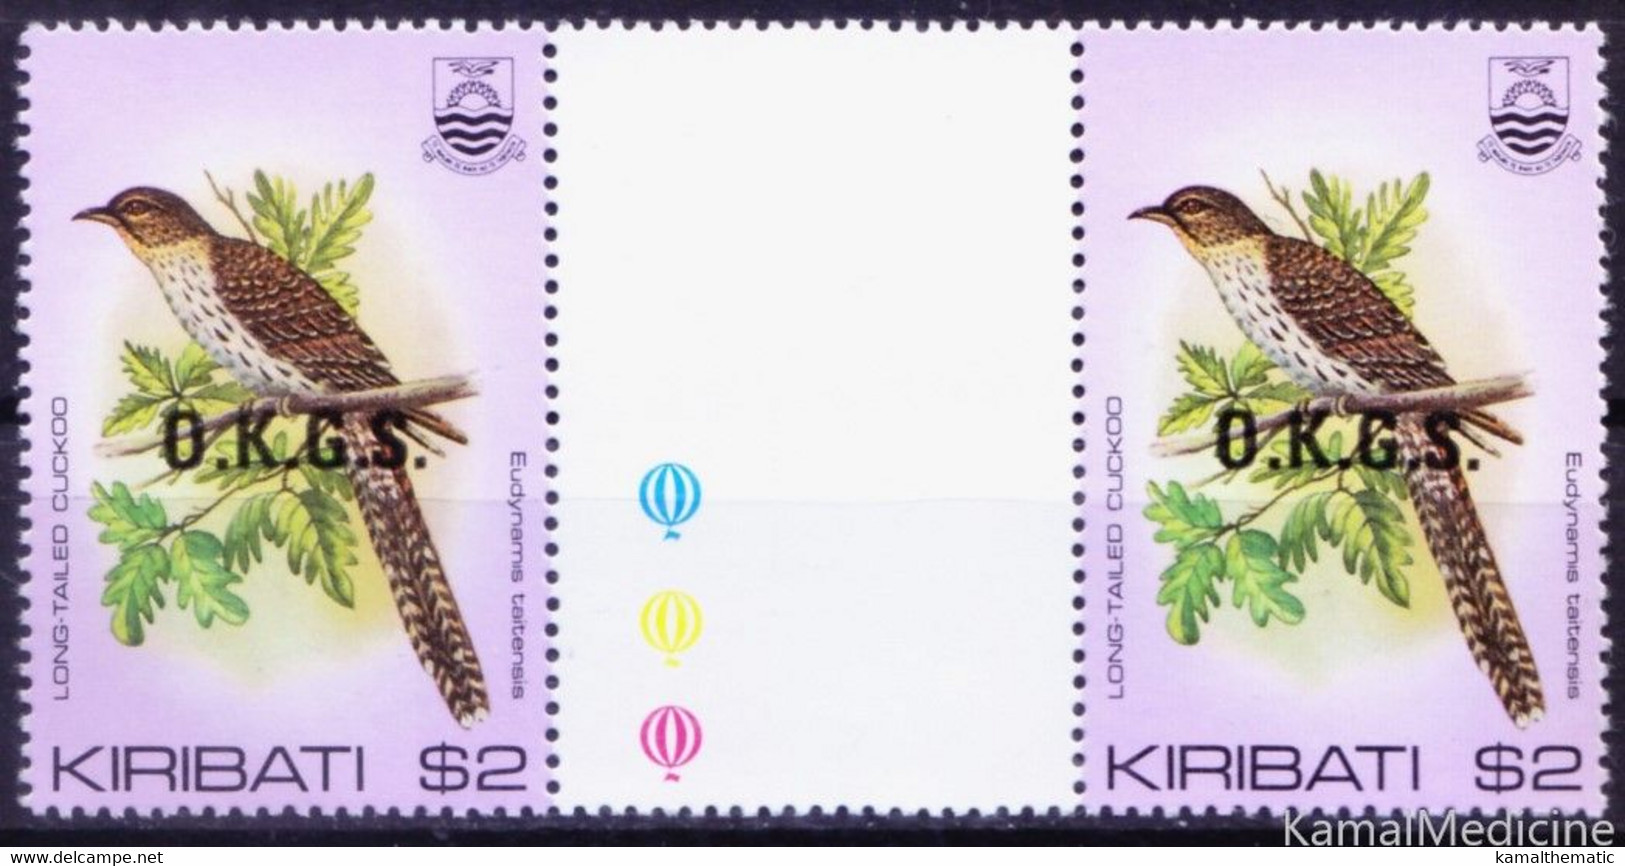 Kiribati 1983 MNH OKGS OVP Gutter Pair, Long-tailed Cuckoo, Birds - Cuckoos & Turacos